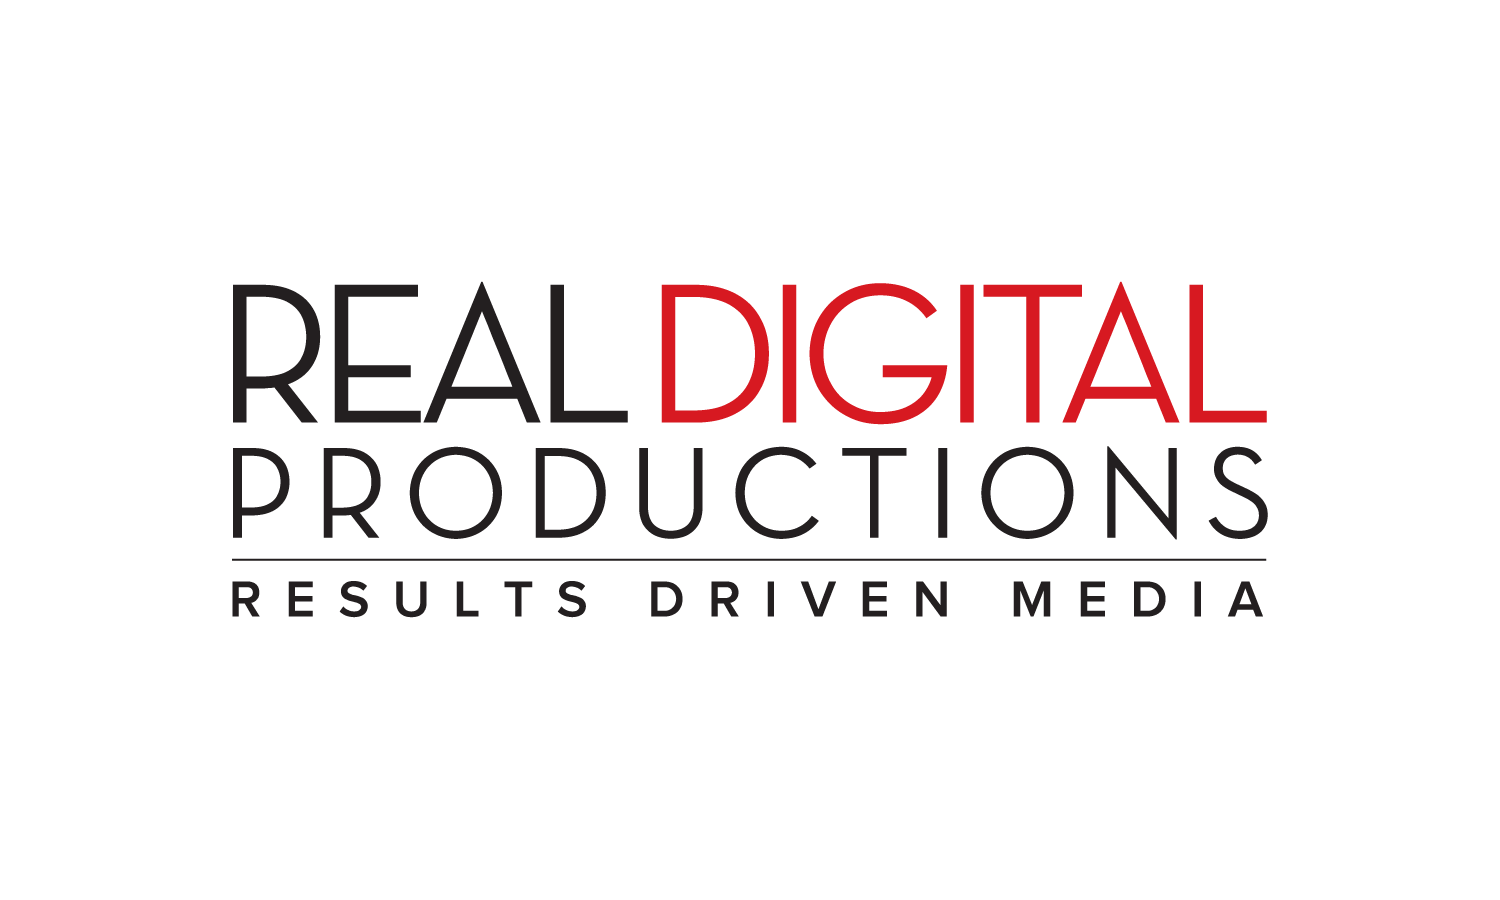 Real Digital Productions